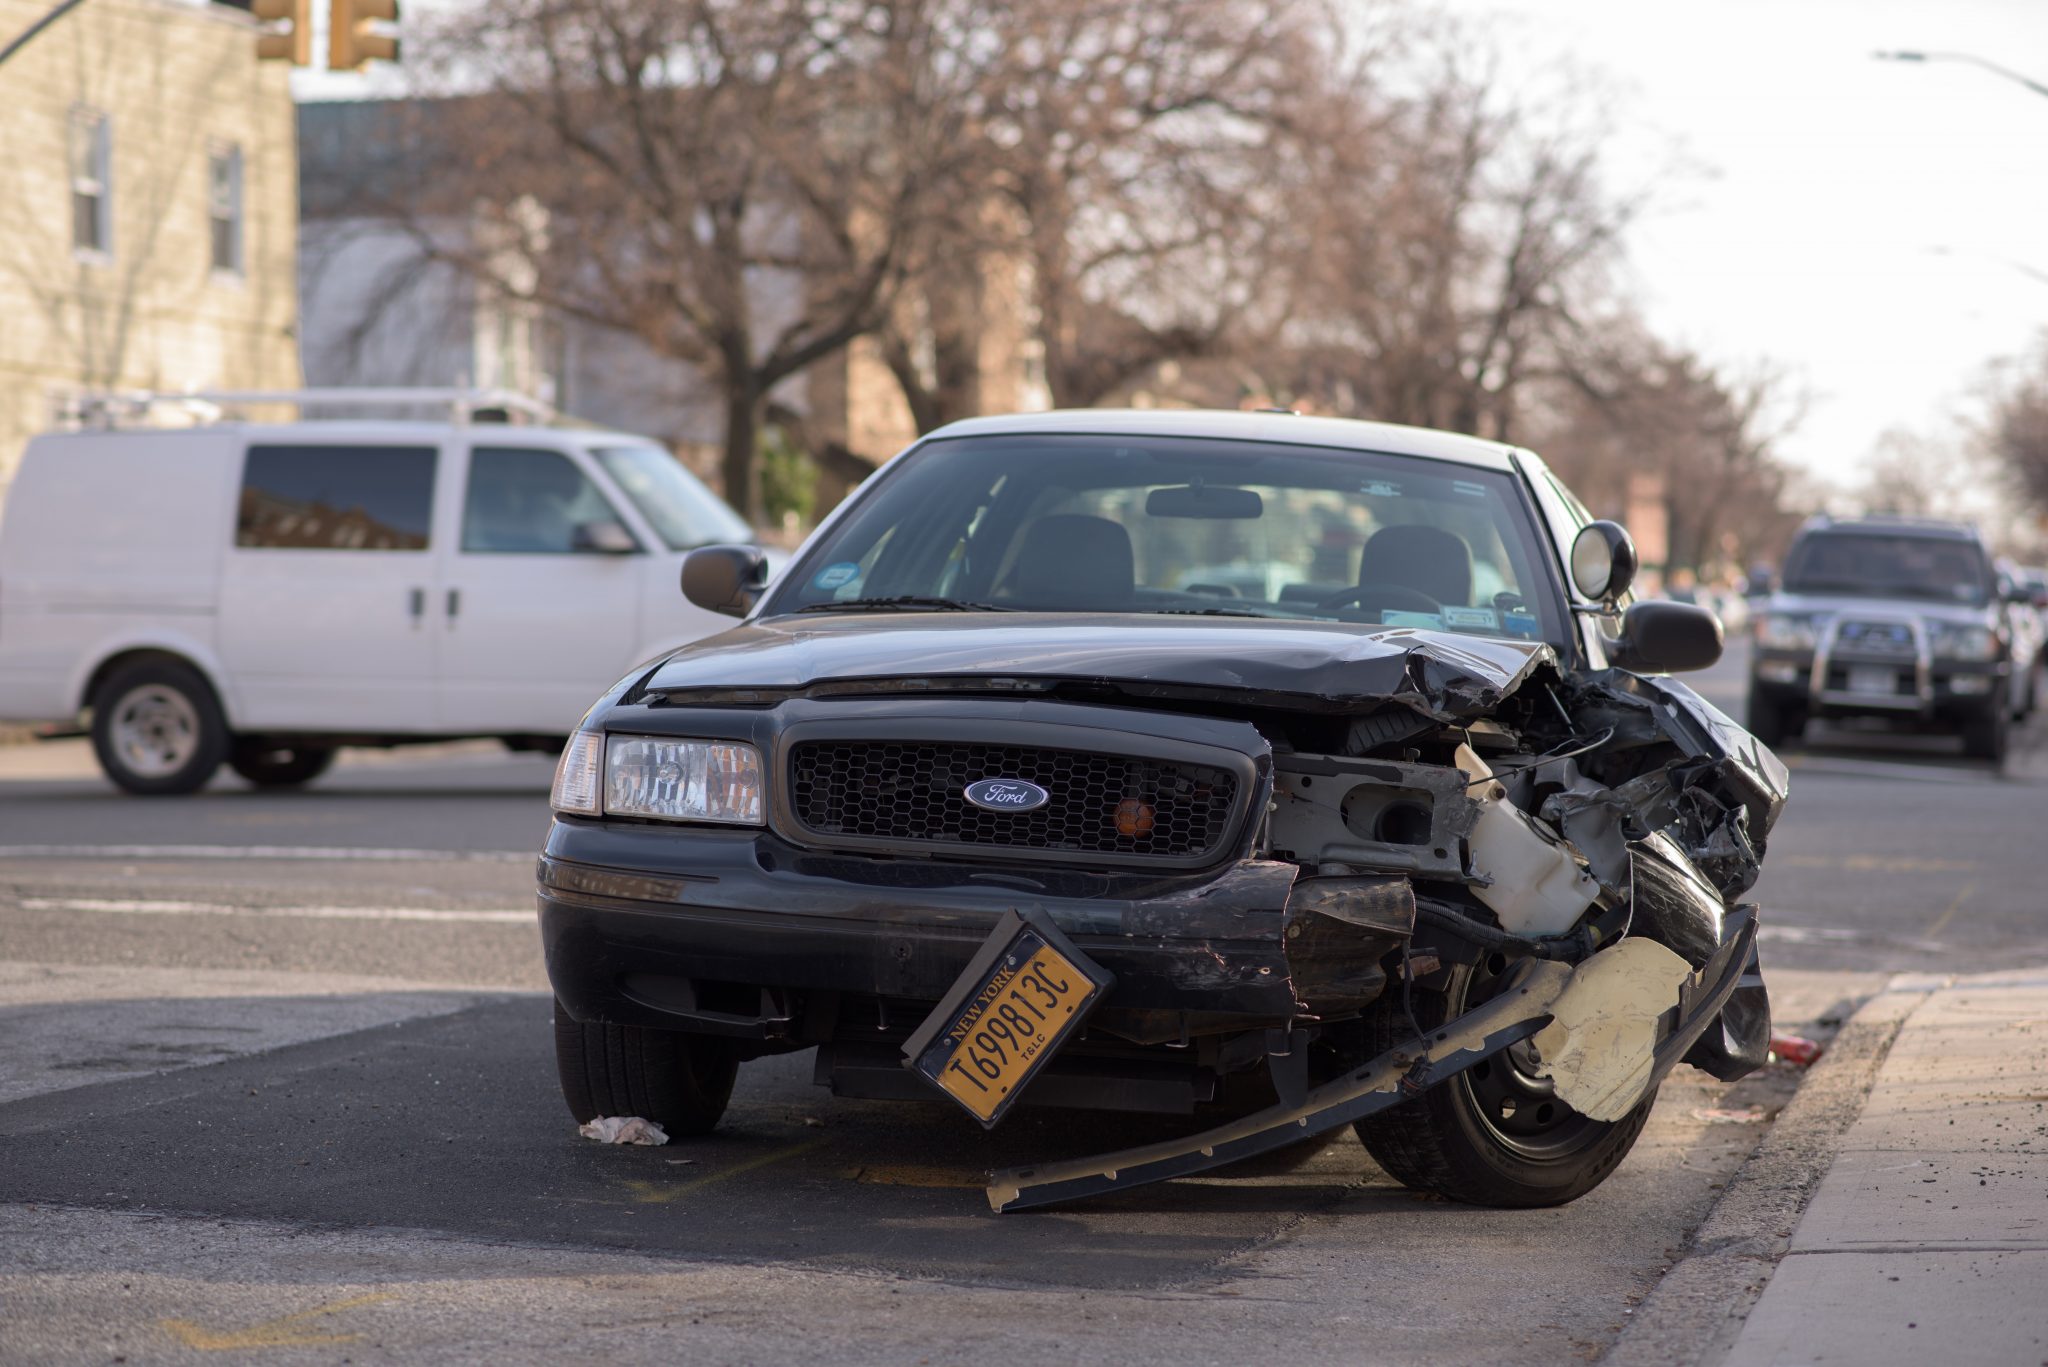 Accident Car Safety Cash for scrap car Car Accident Traffic Accident Road Risks Car Dent Company Vehicle Car Accident auto insurance Car Crash